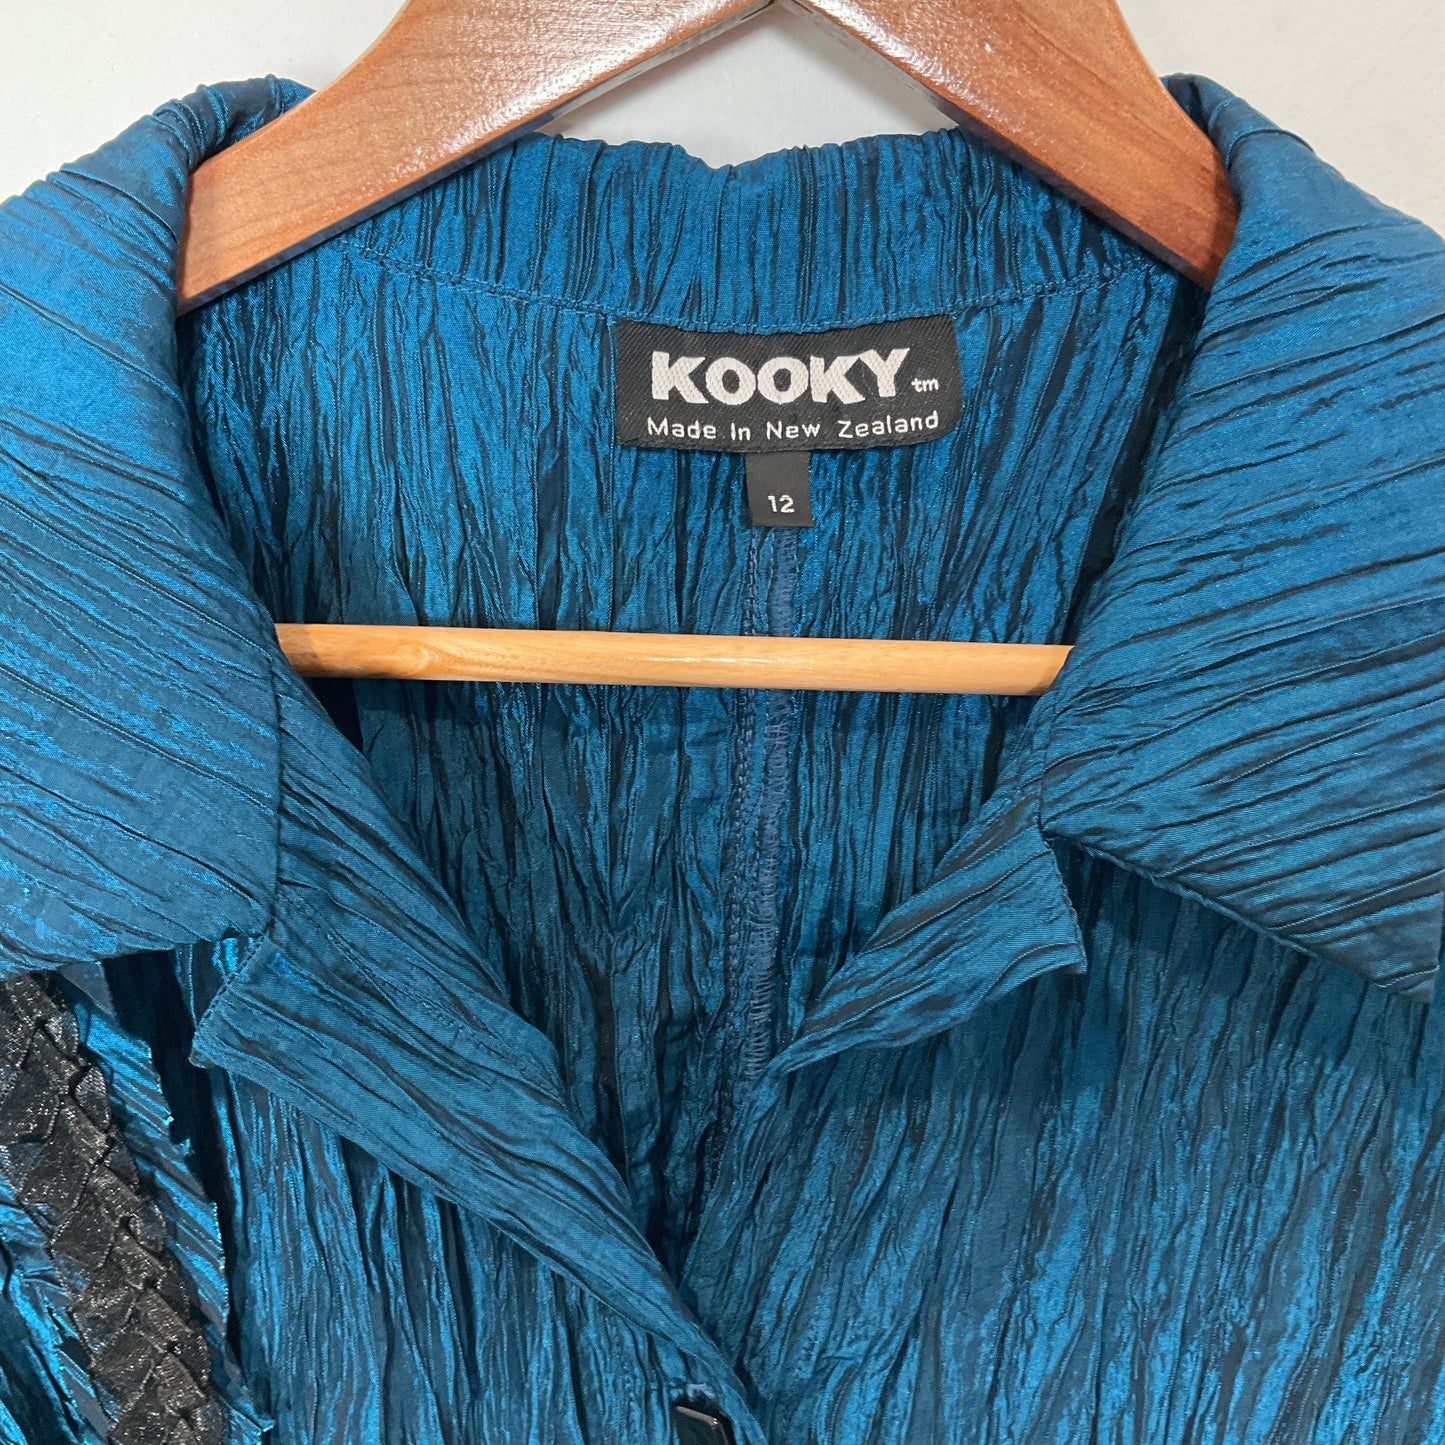 Kooky - Blue Top Shirts & Tops